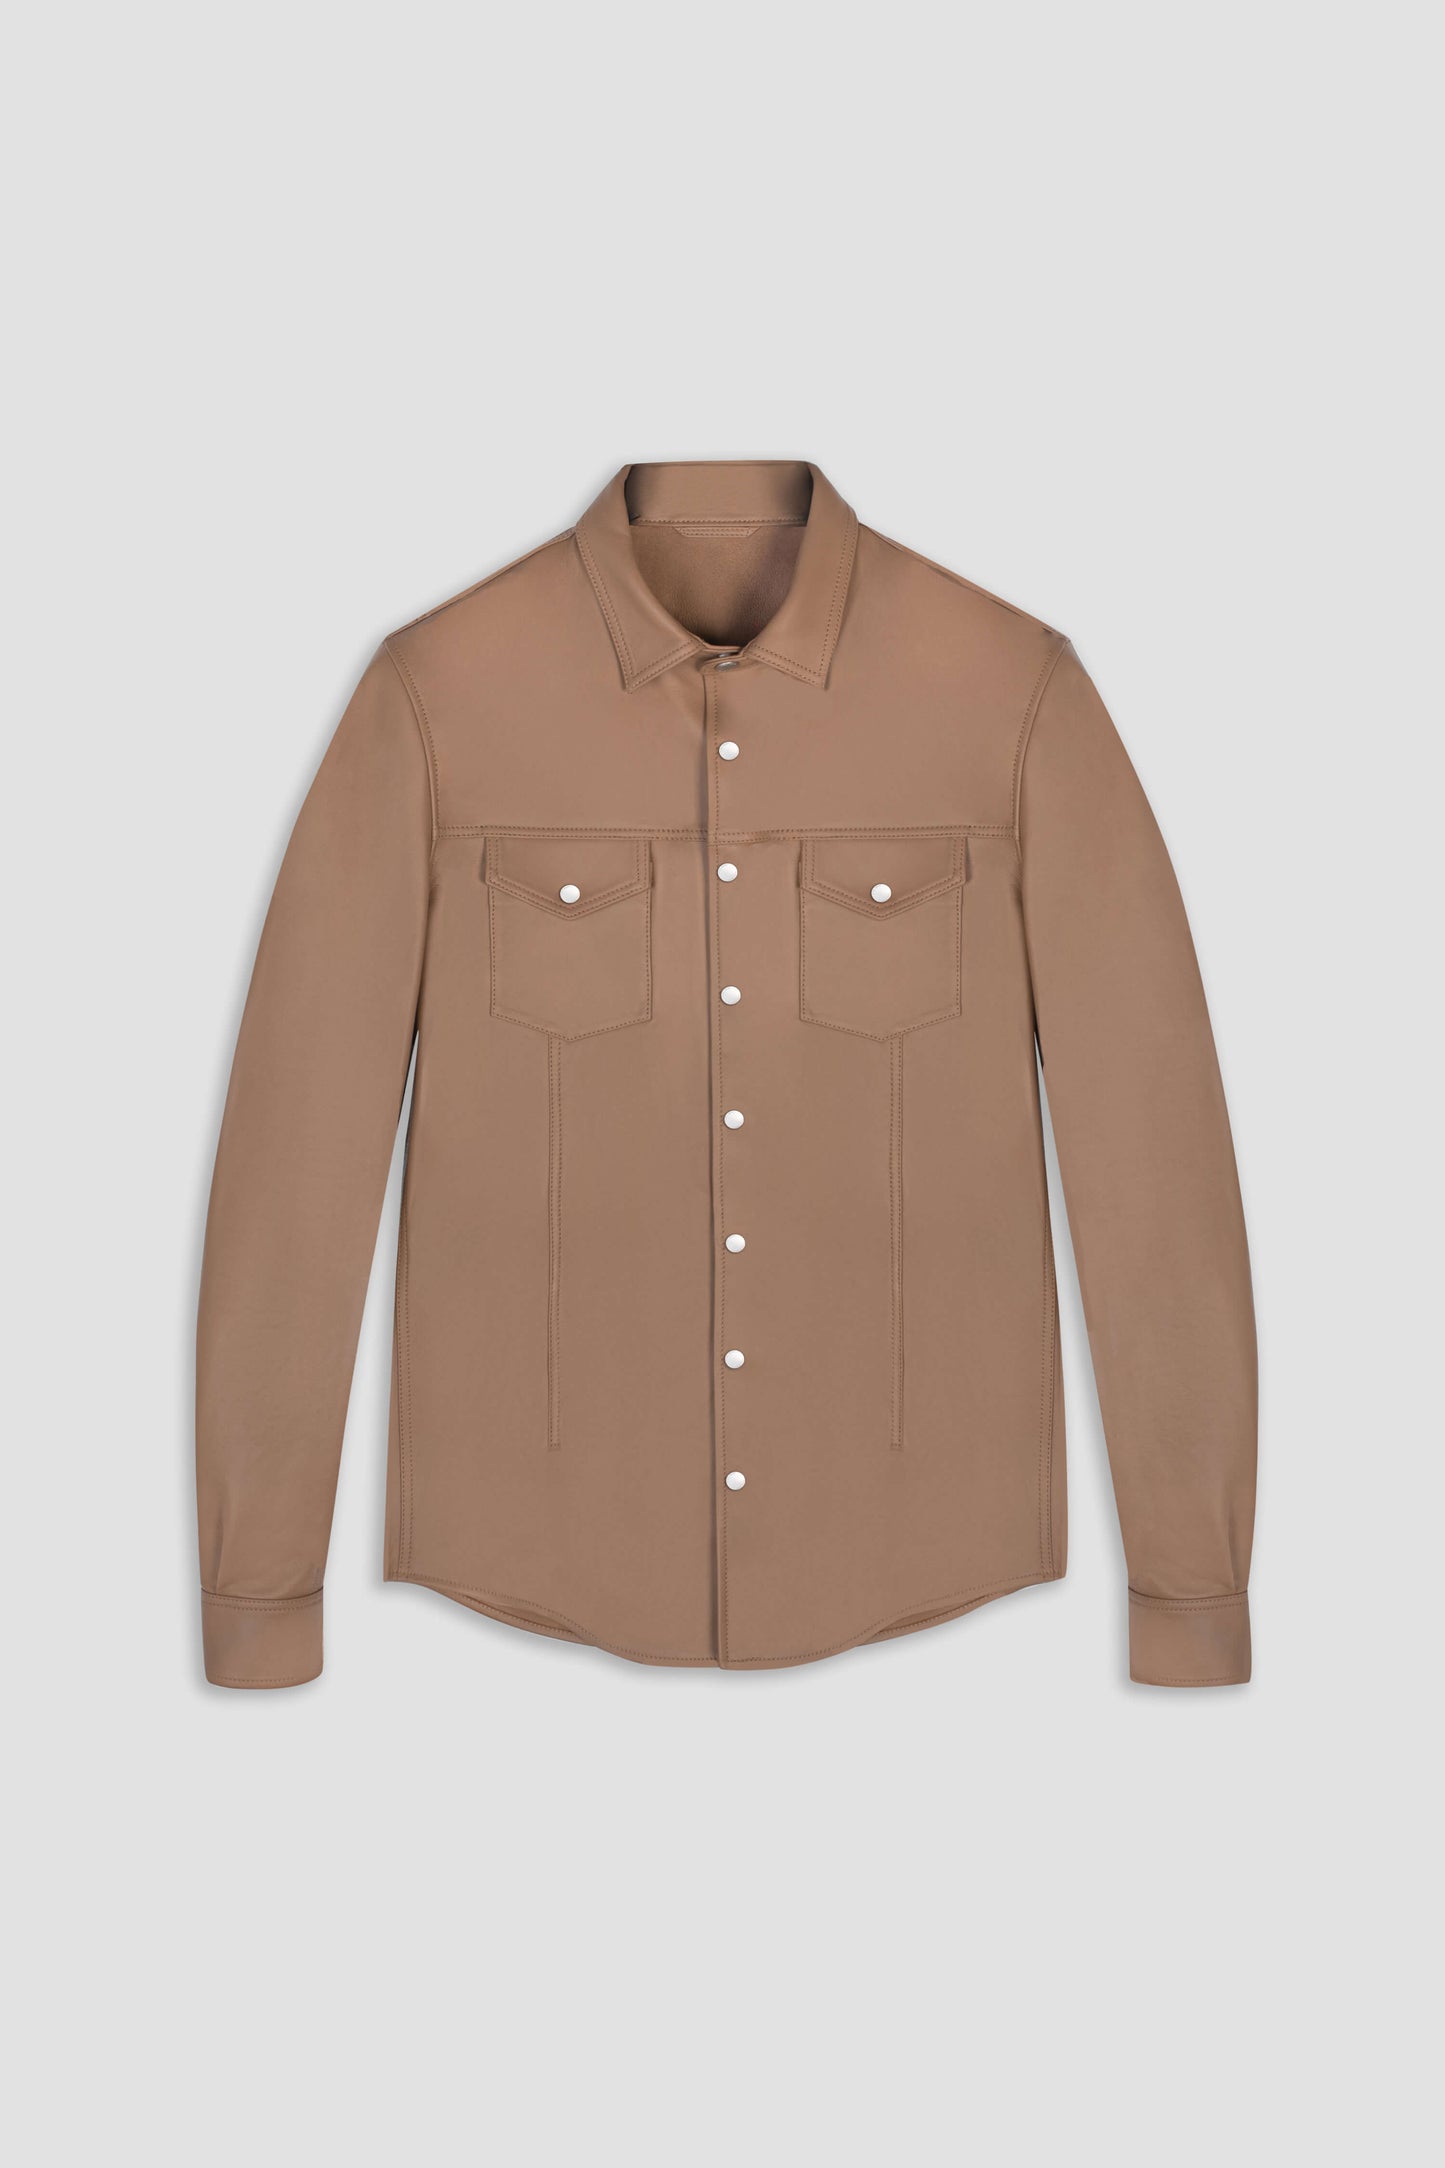 BODA Leather Overshirt: Desert